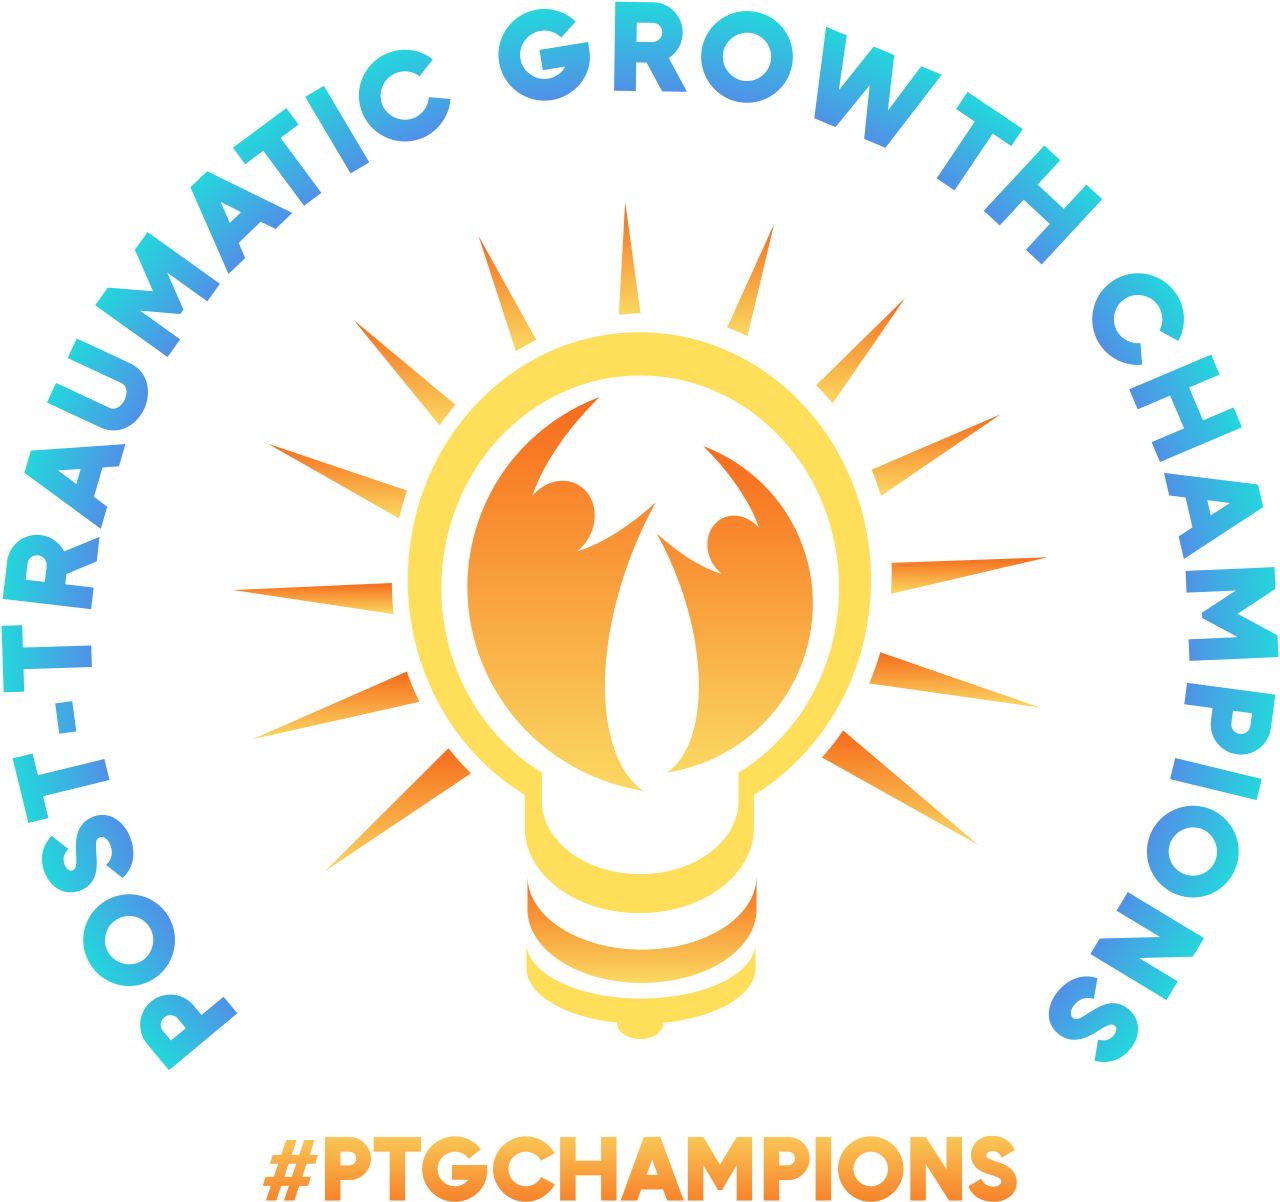 Post-Traumatic Growth Champions's web page